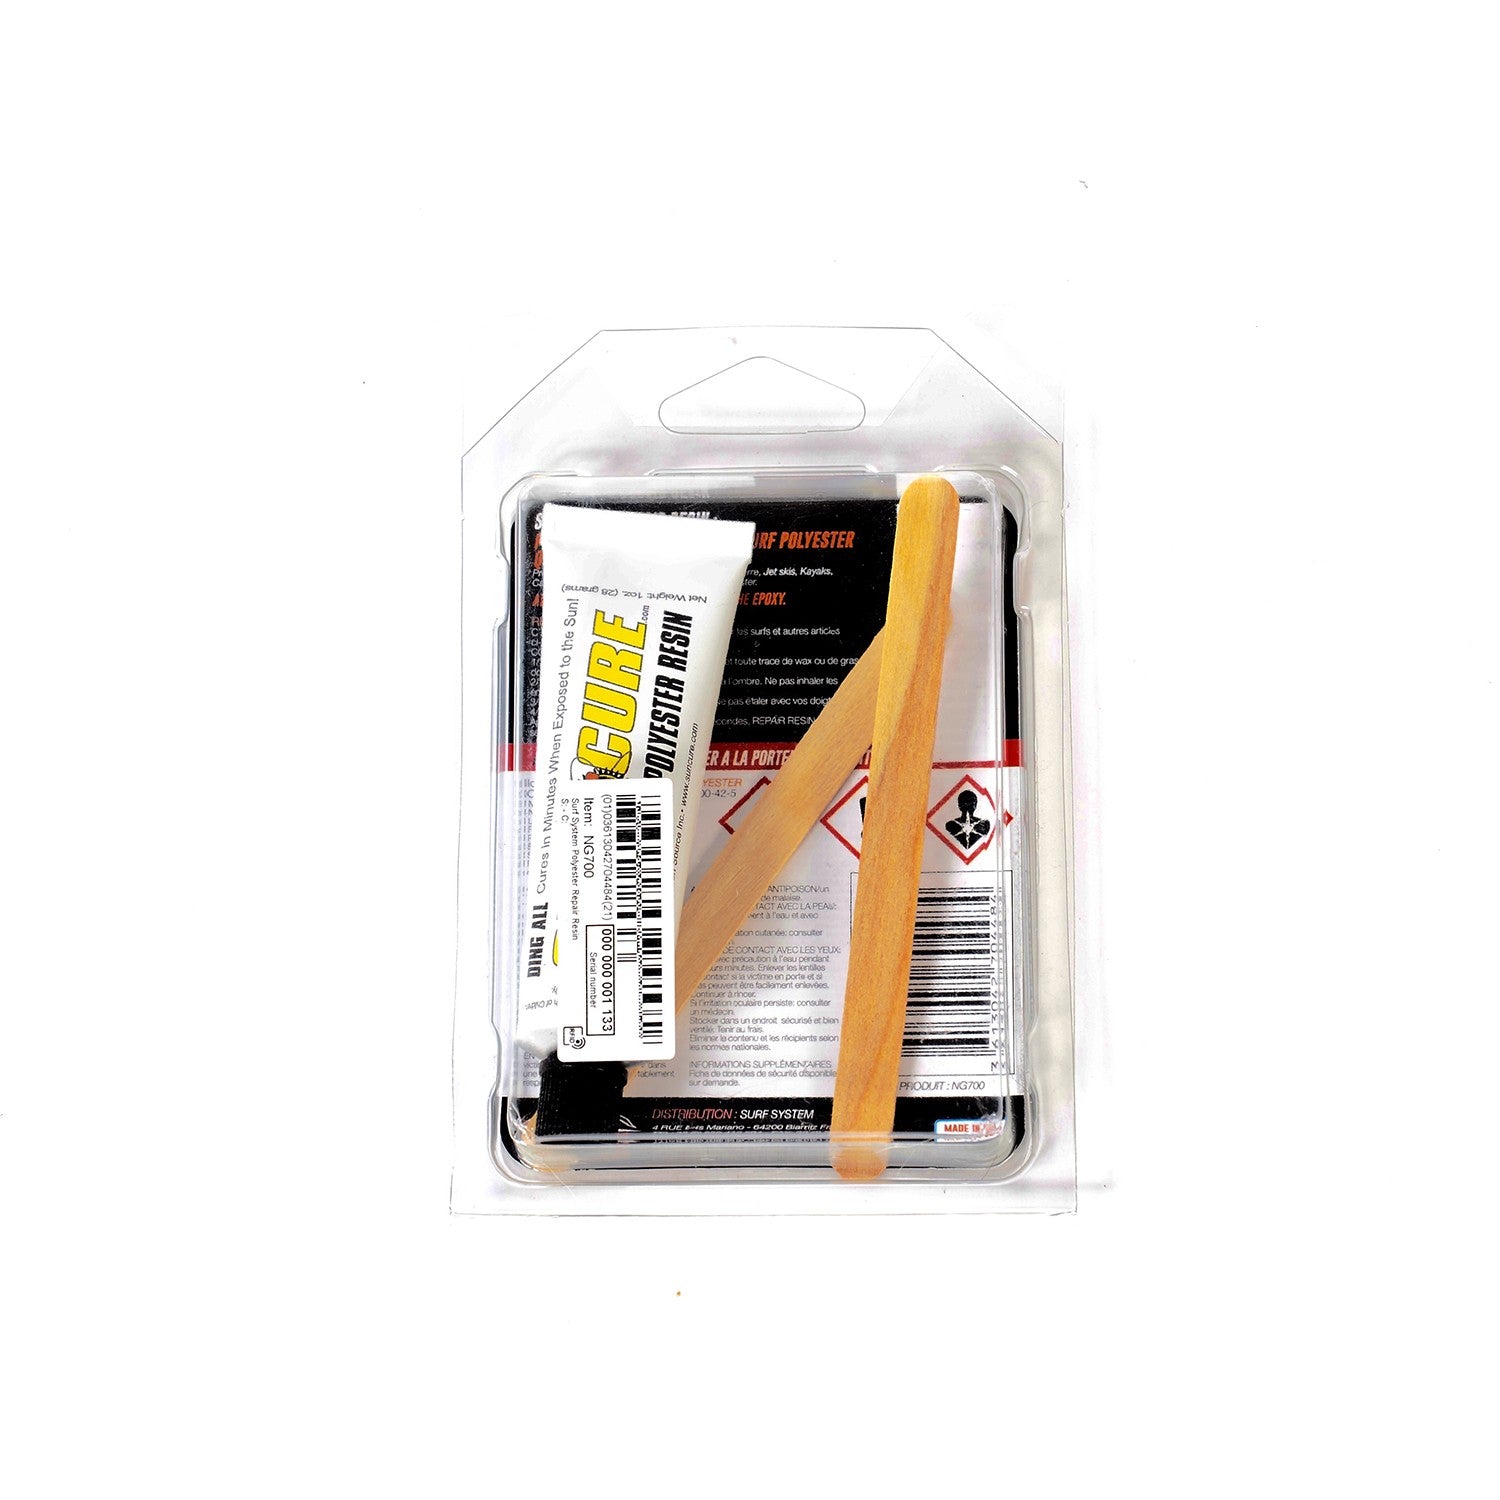 SURF SYSTEM - Mini Kit de réparation - Polyester (PU)